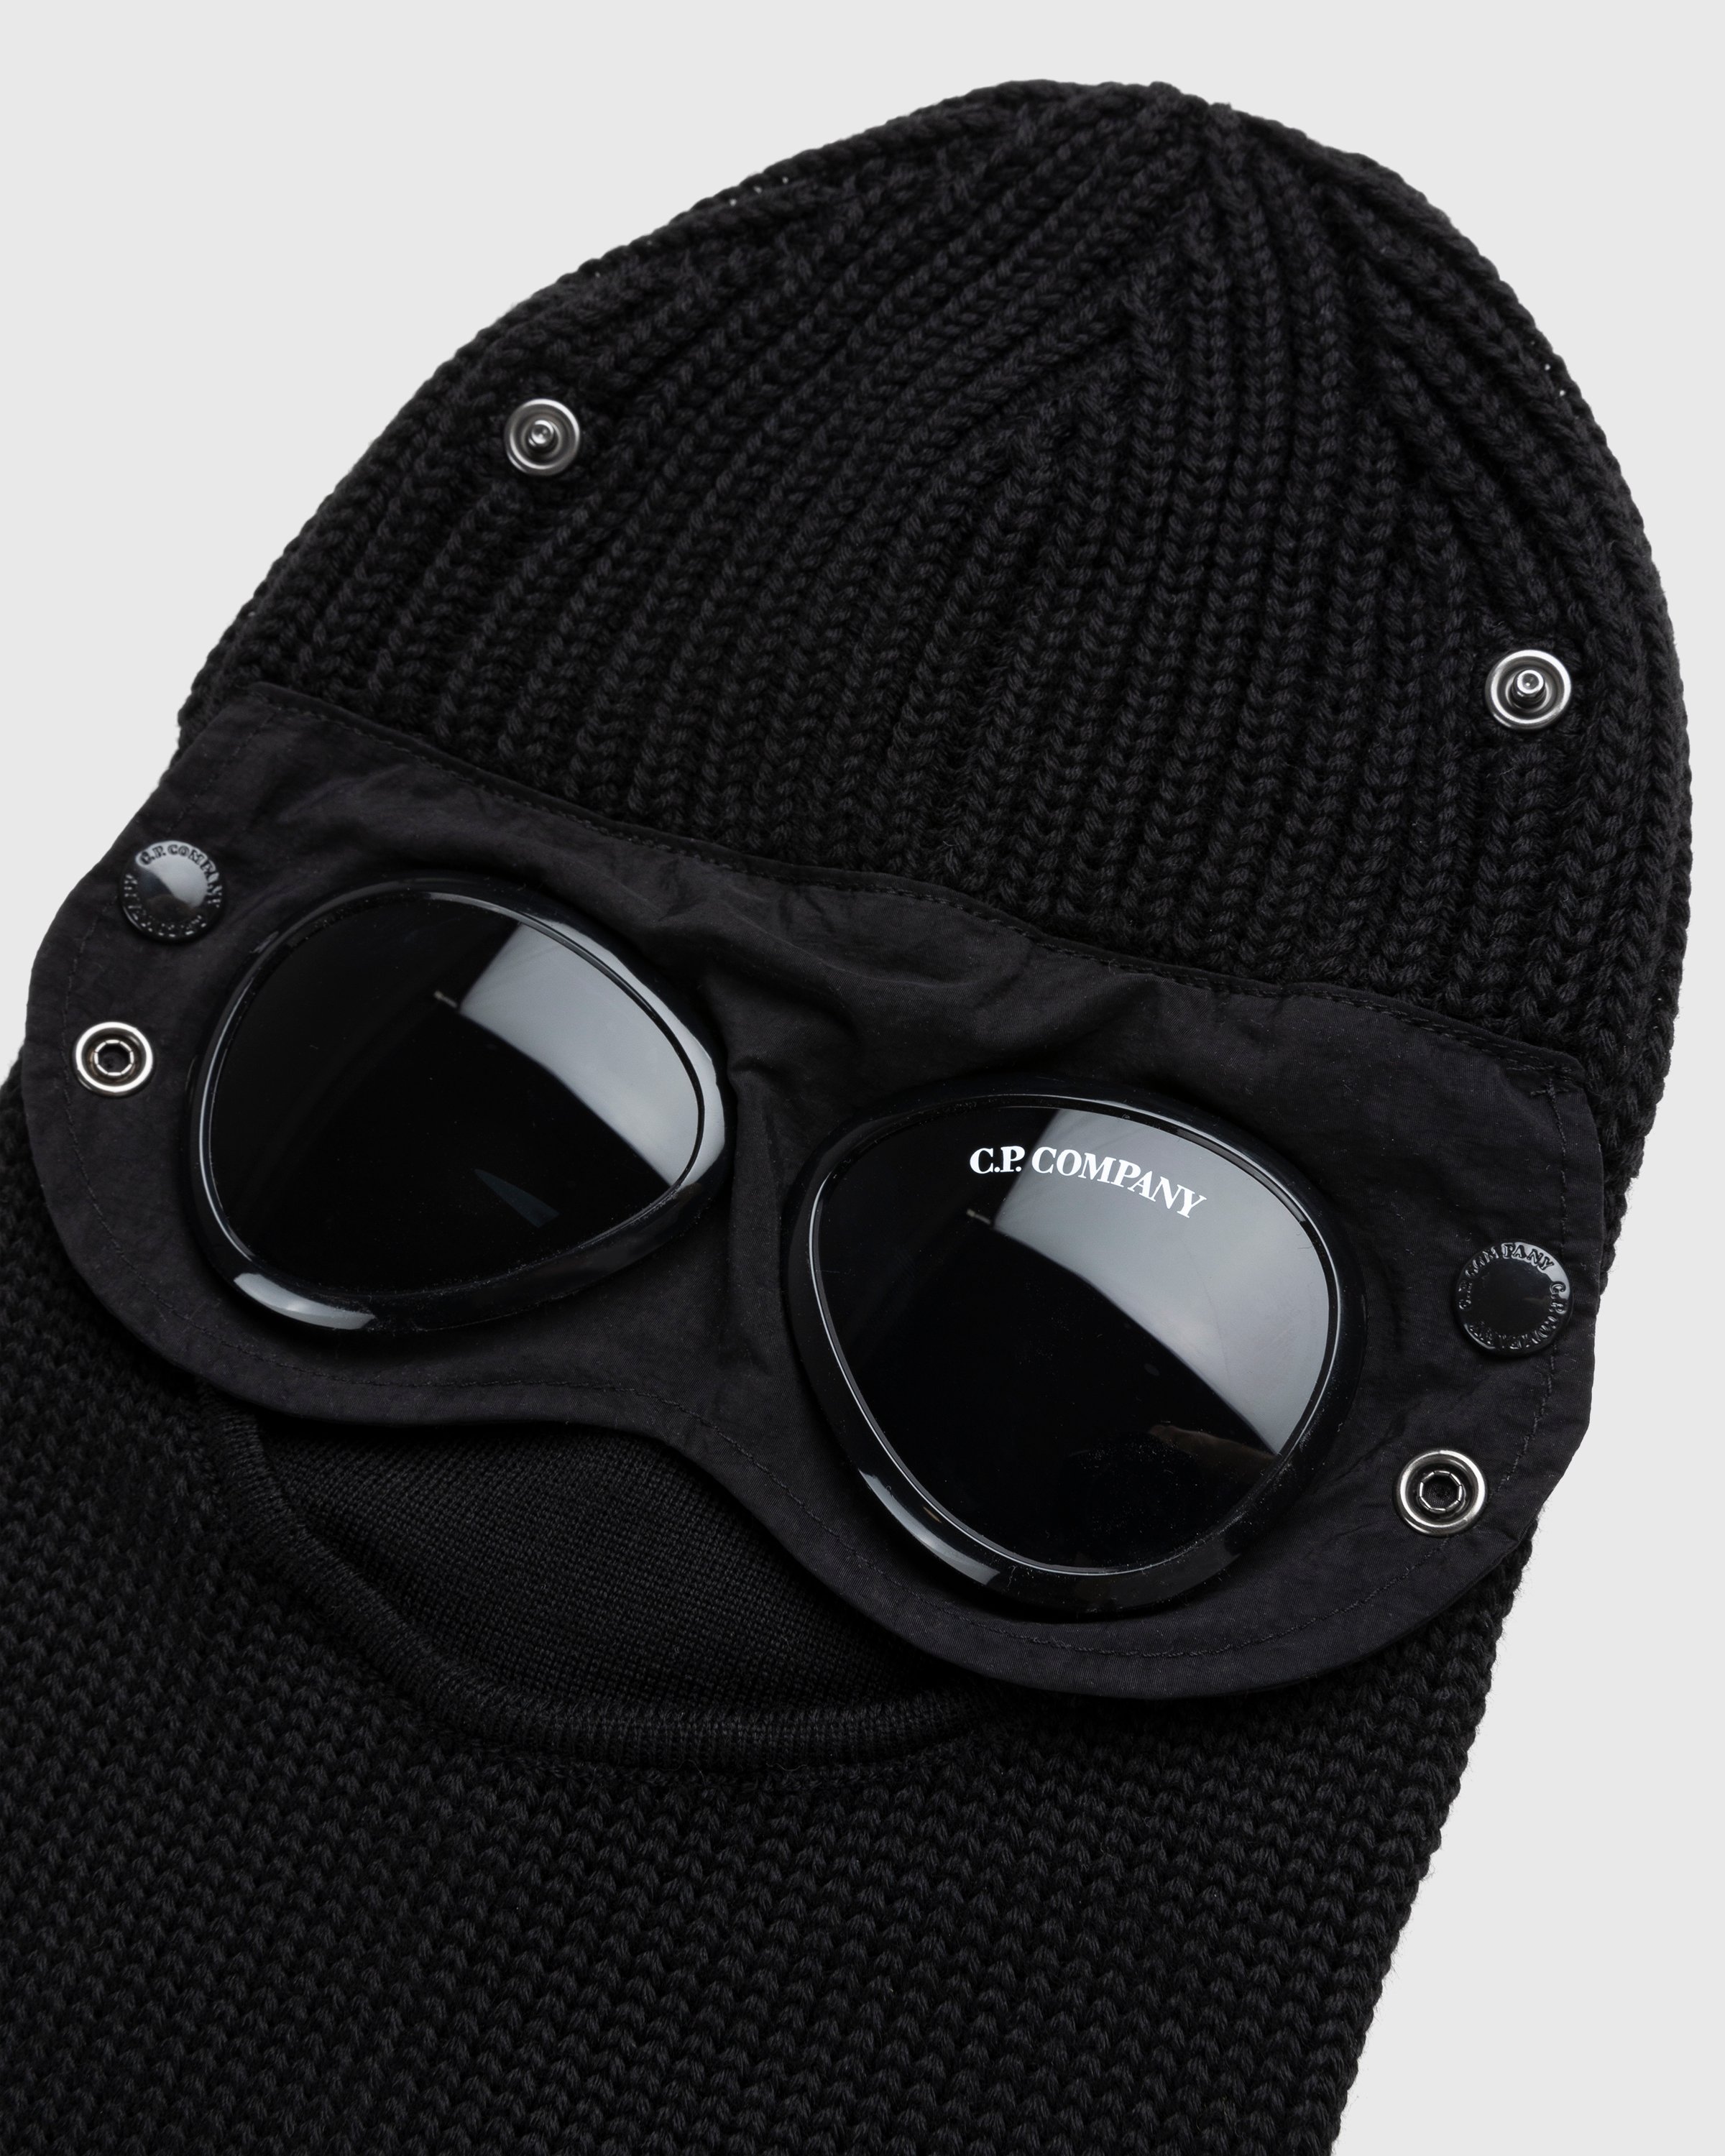 C.P. Company - Extra Fine Merino Wool Goggle Balaclava Black - Accessories - Black - Image 5